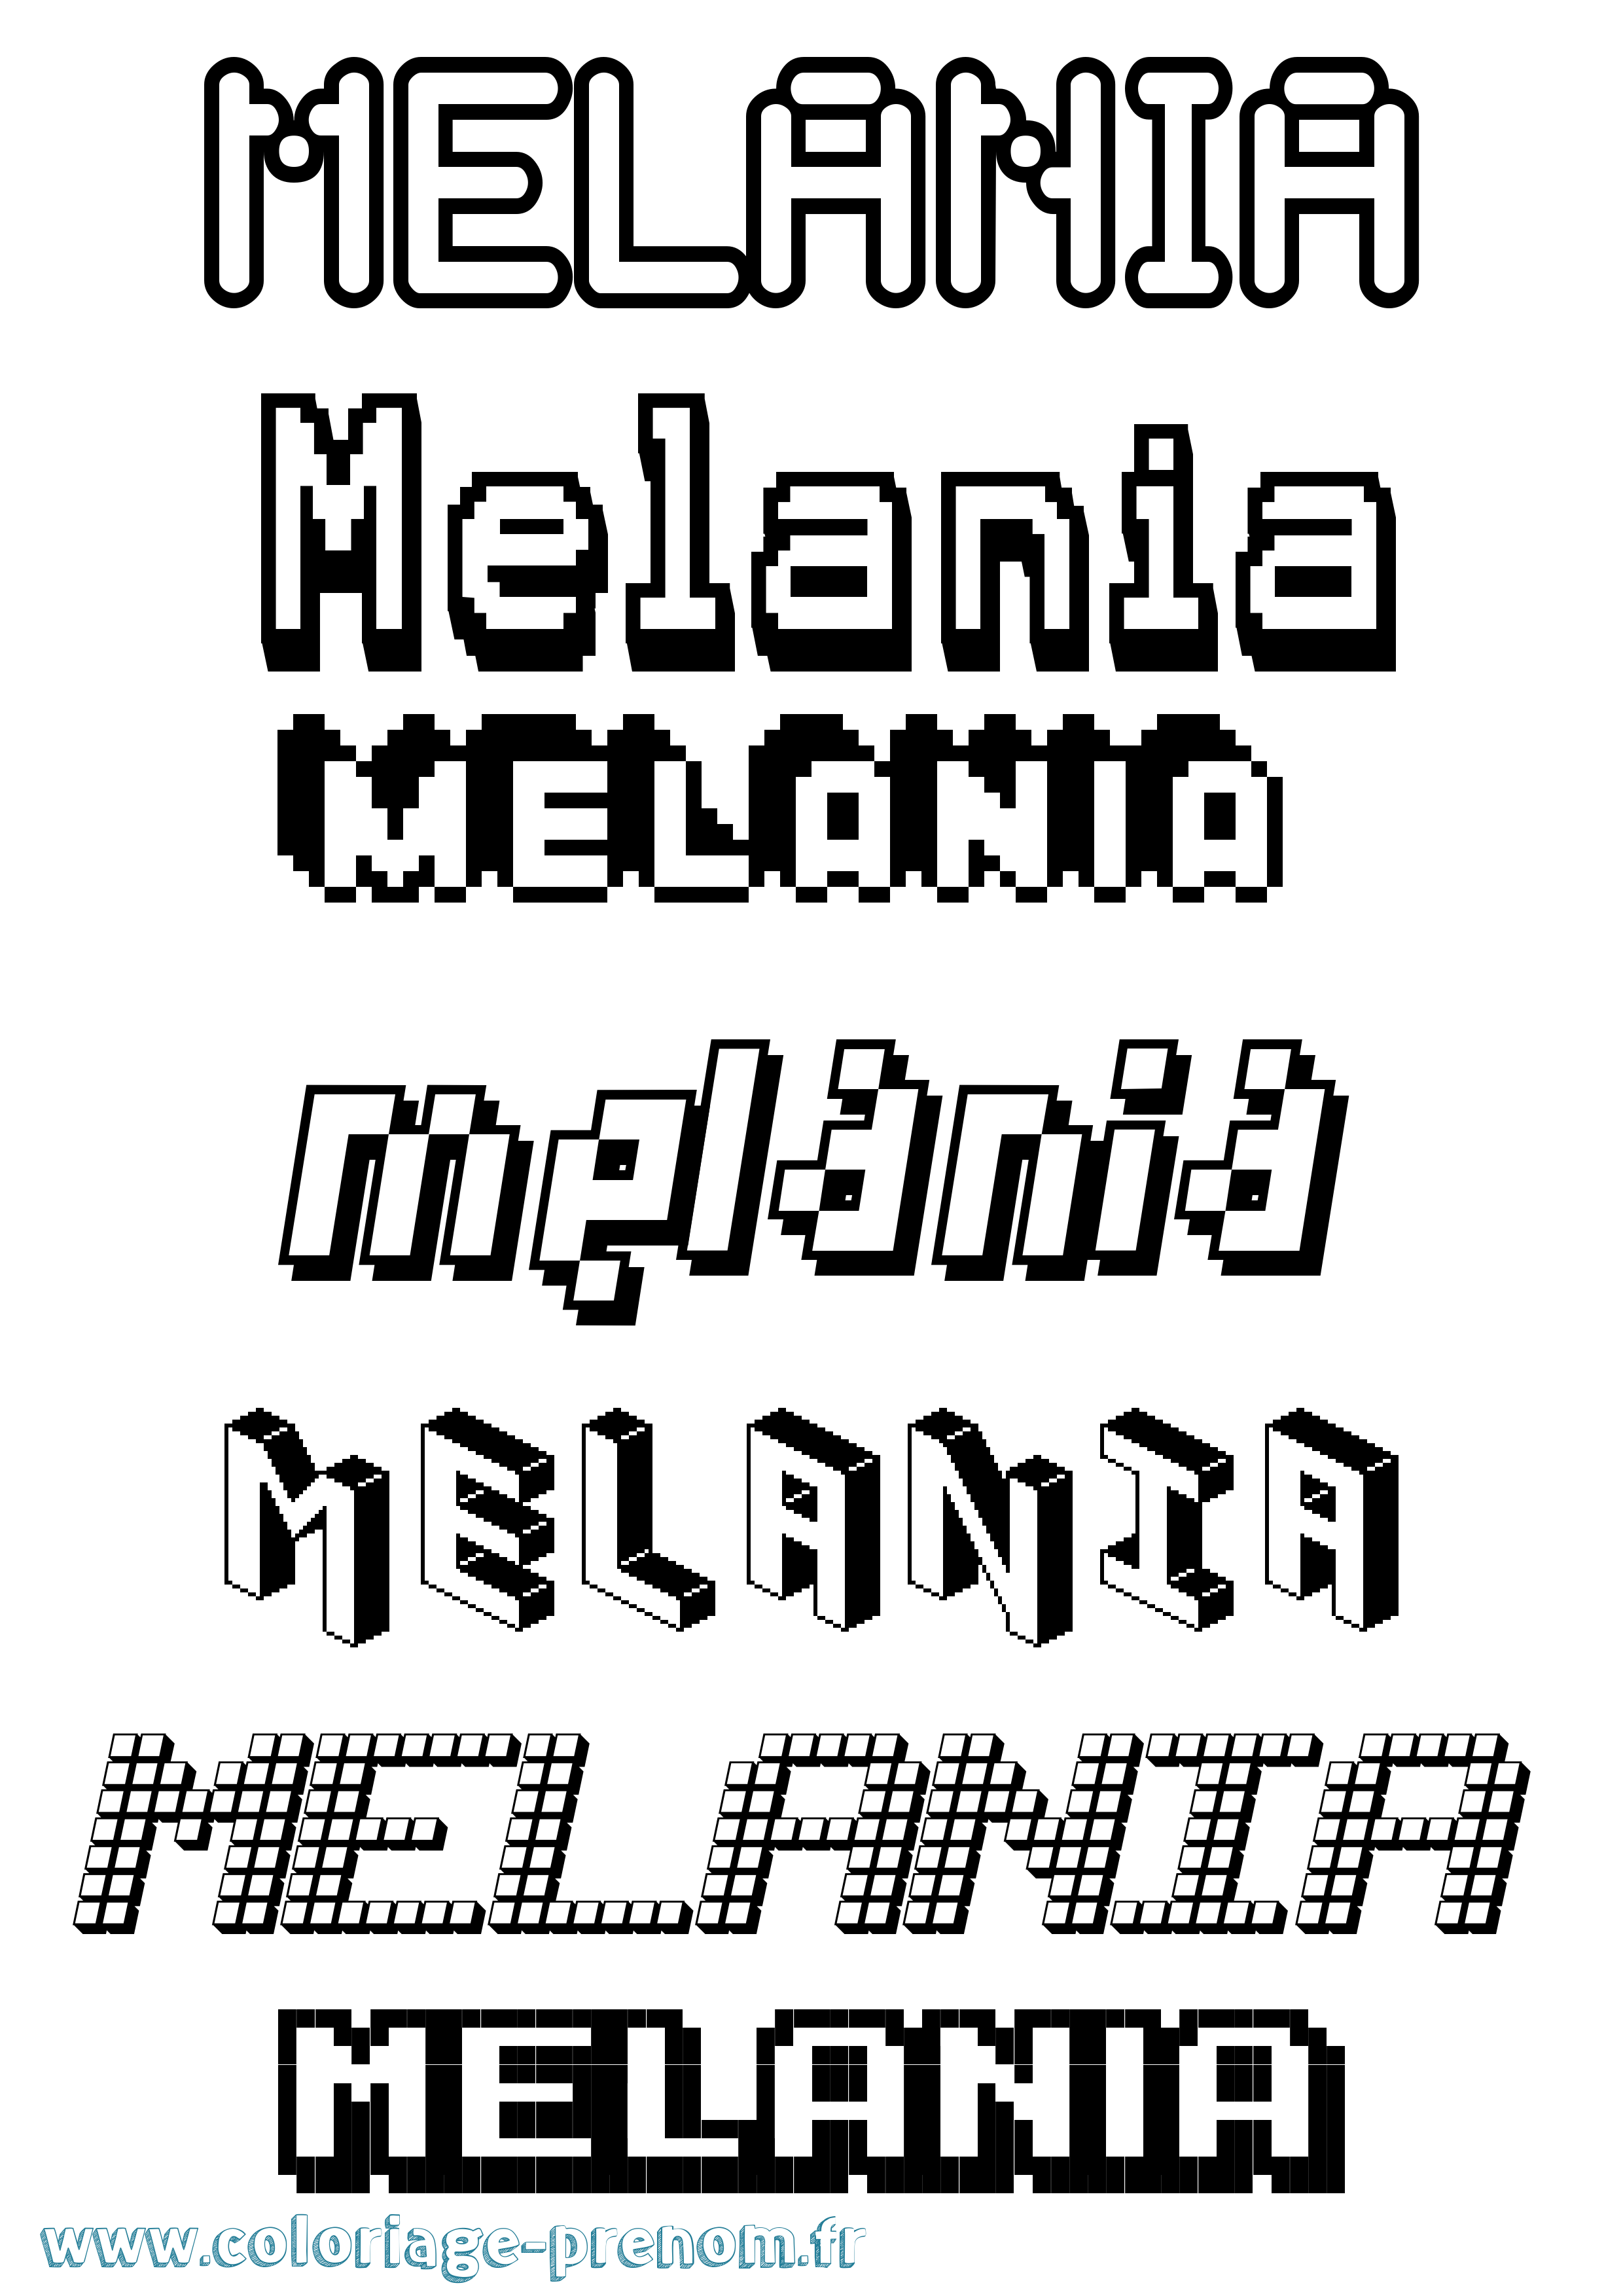 Coloriage prénom Melania Pixel